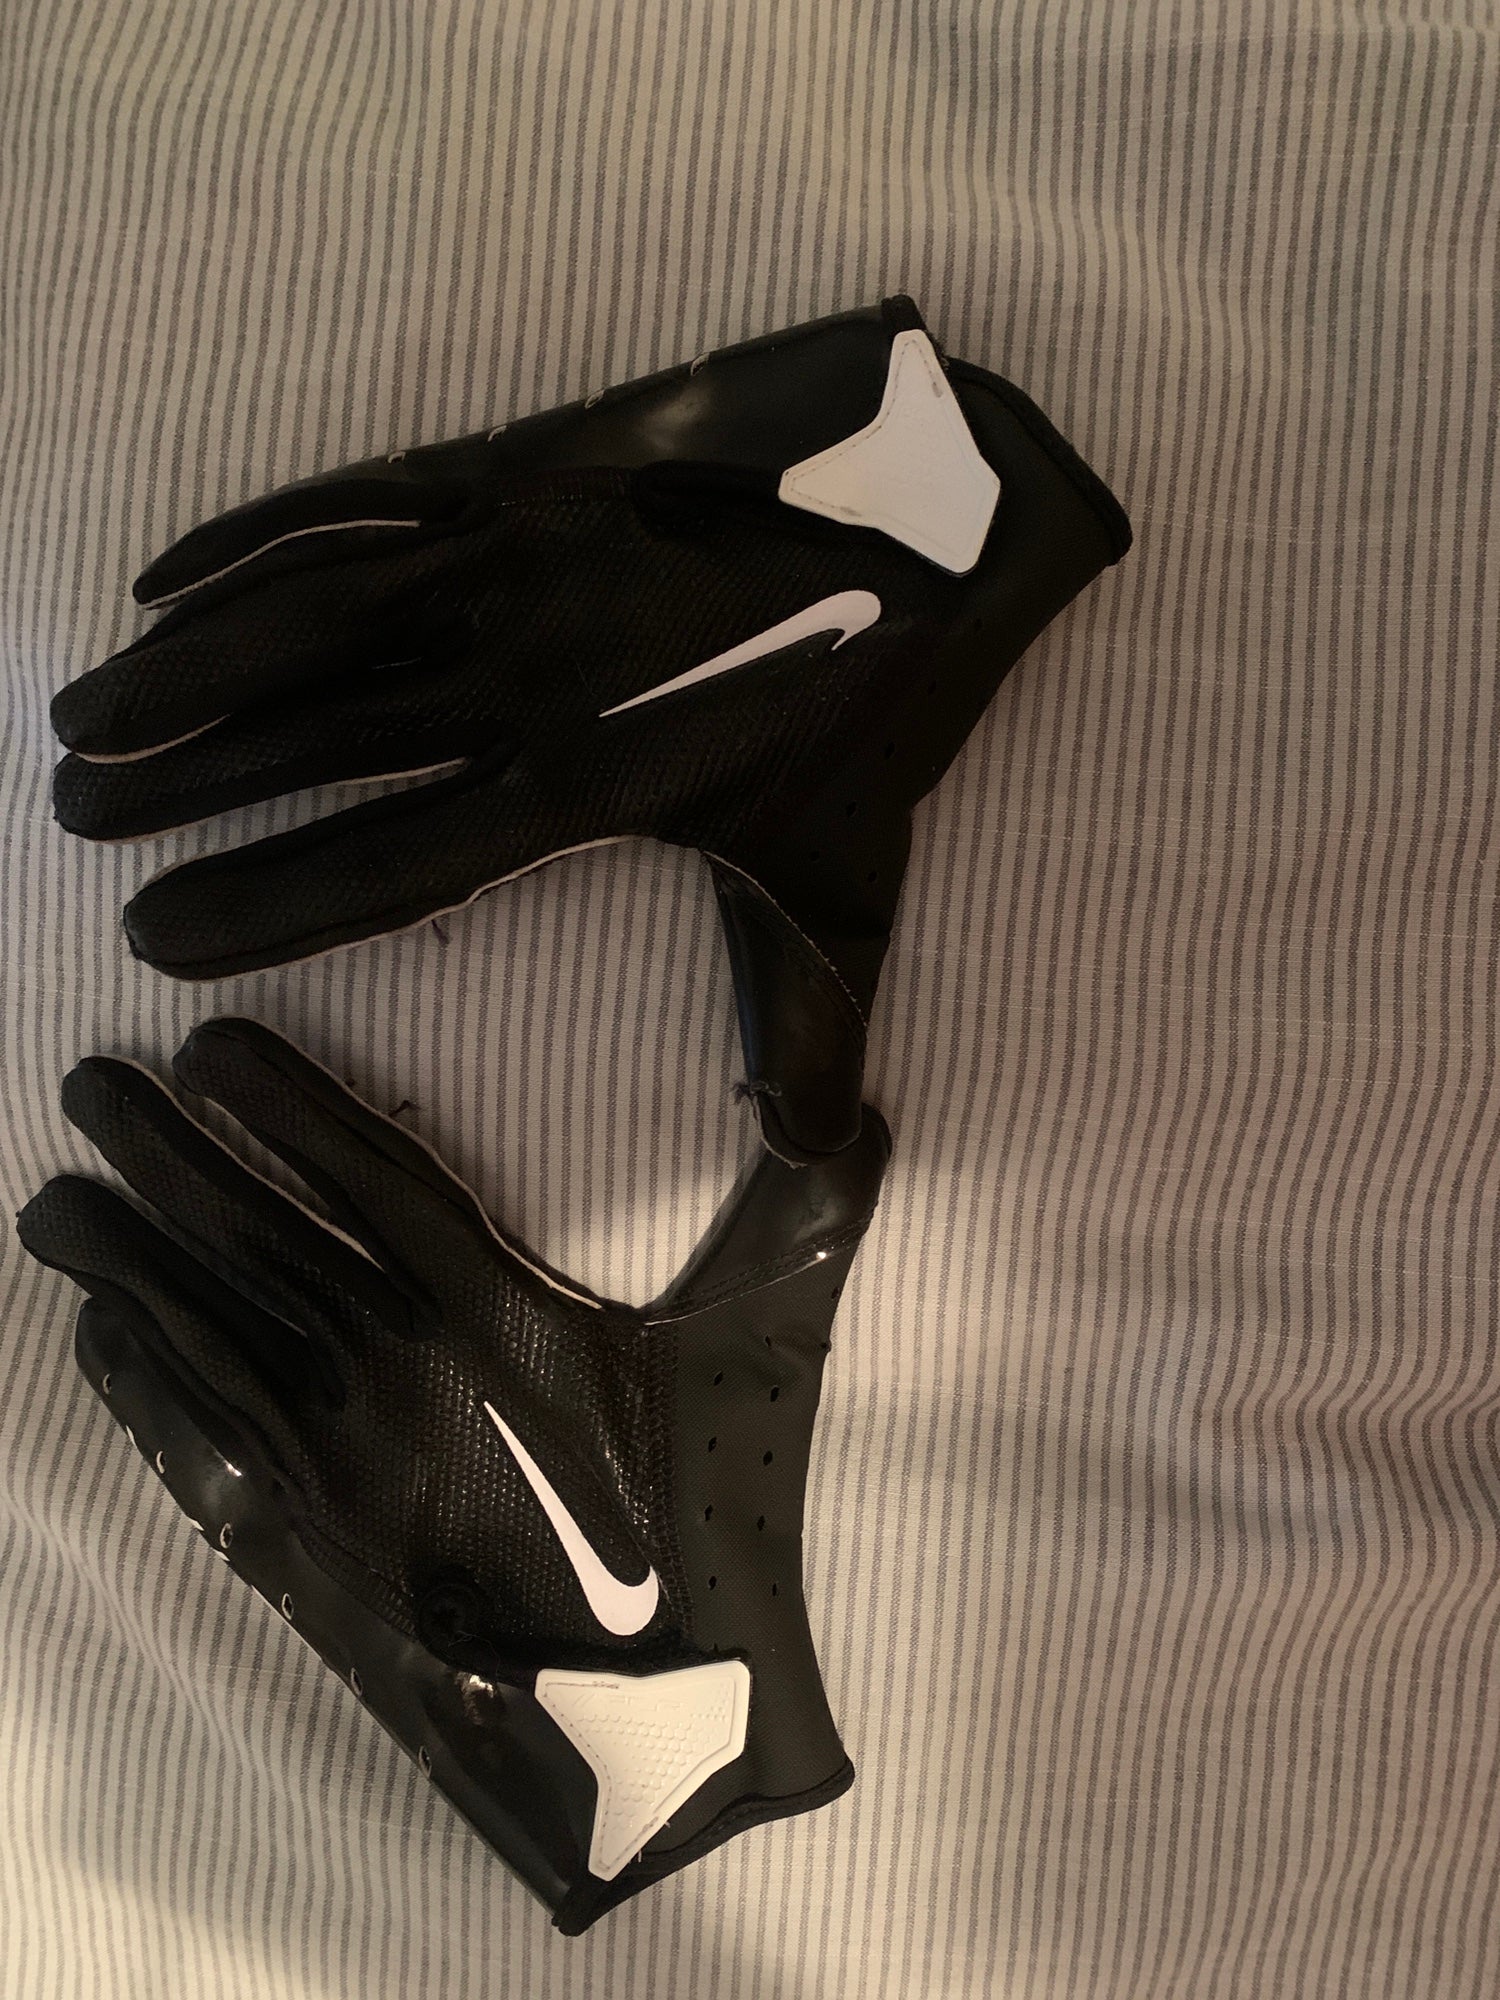 Nike Vapor Jet 5 Eagles PE Gloves - M & L